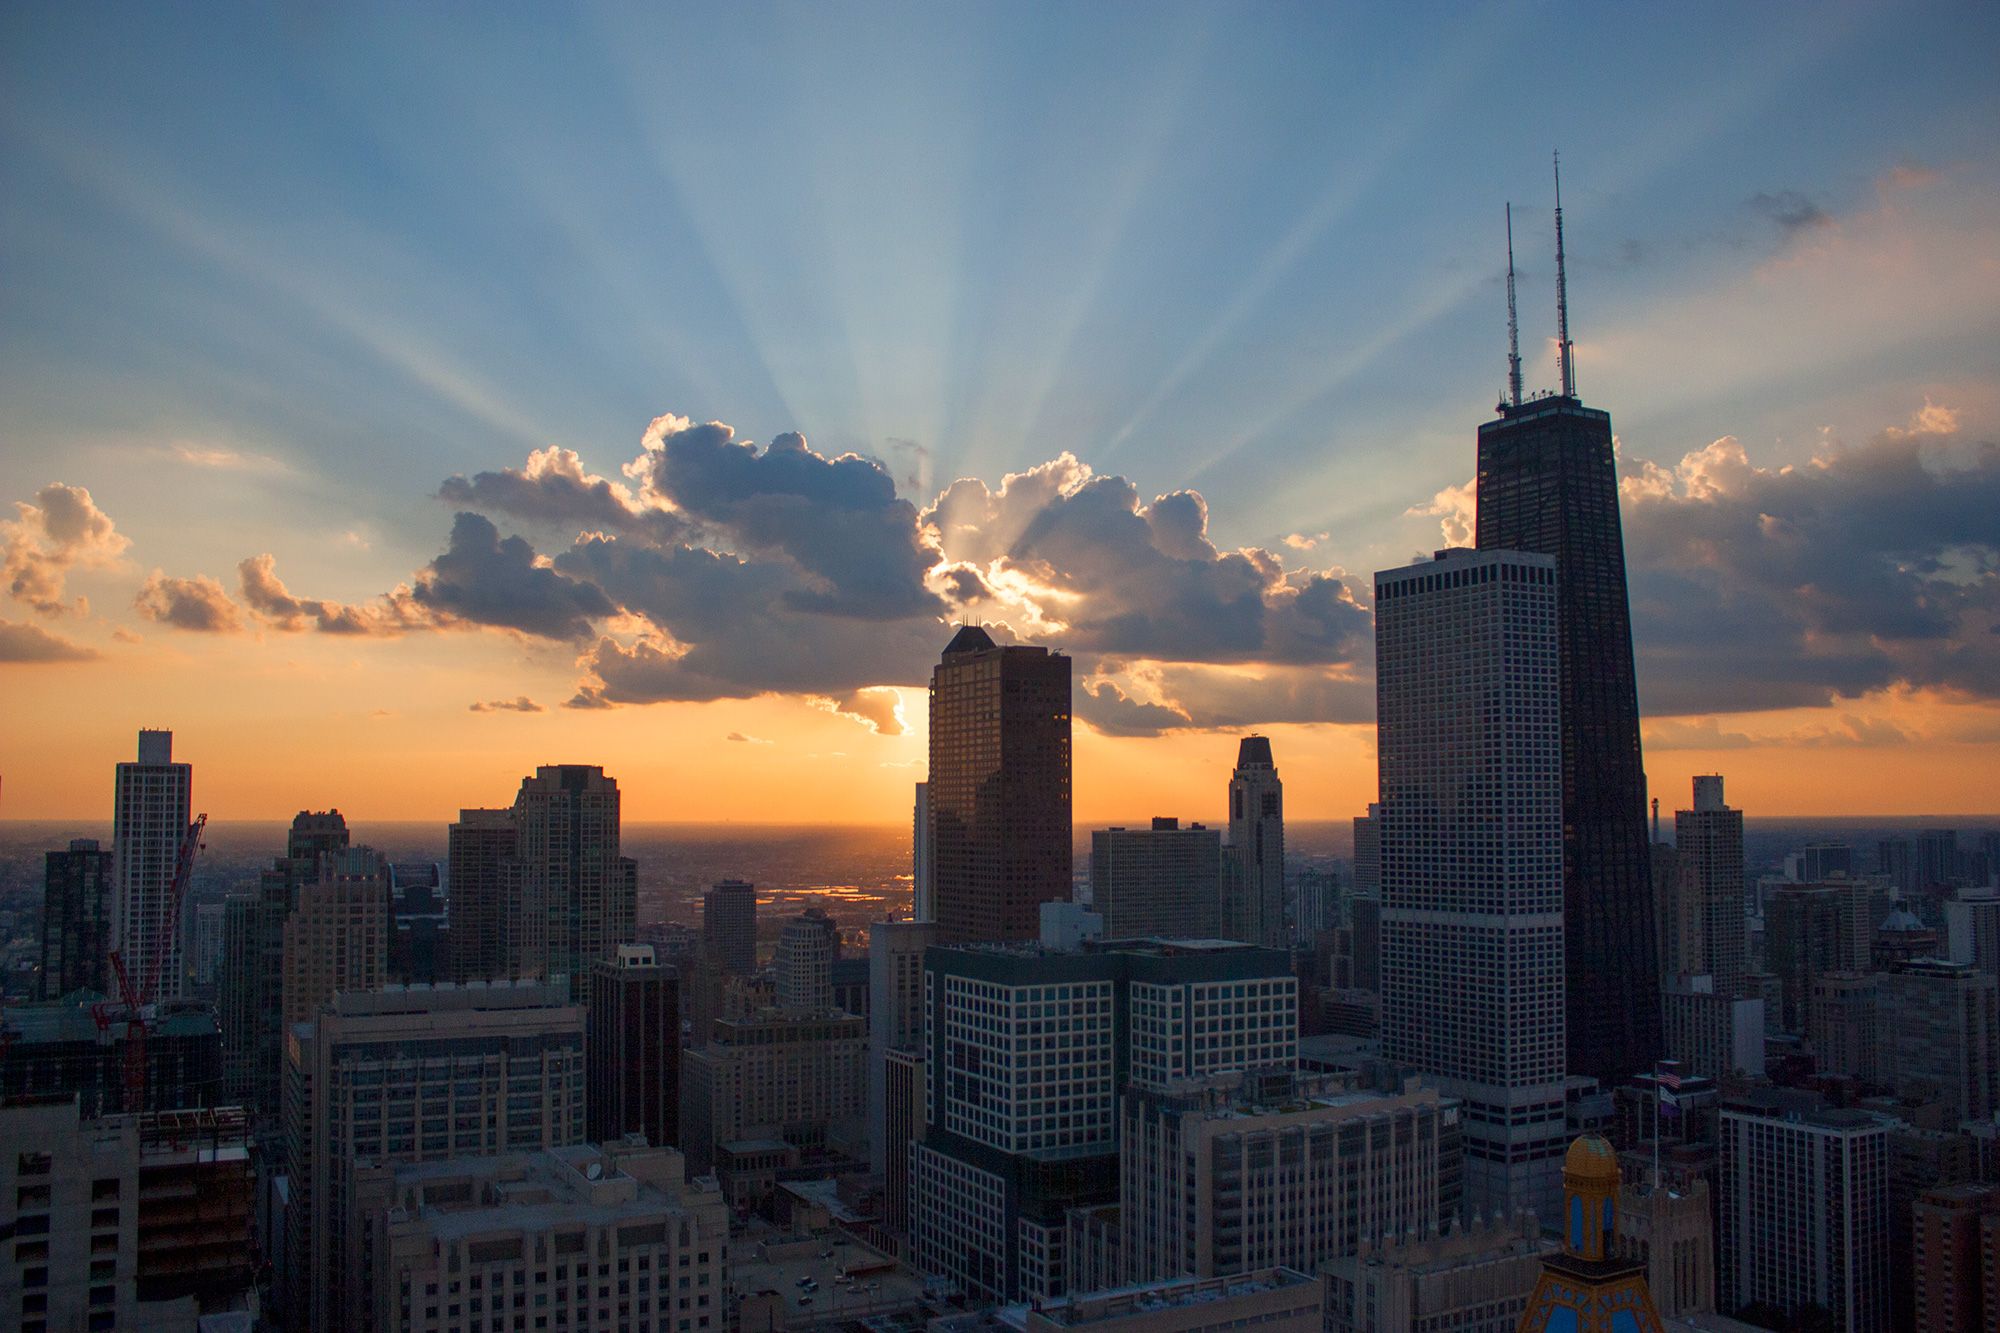 sun setting over the Chicago skyline